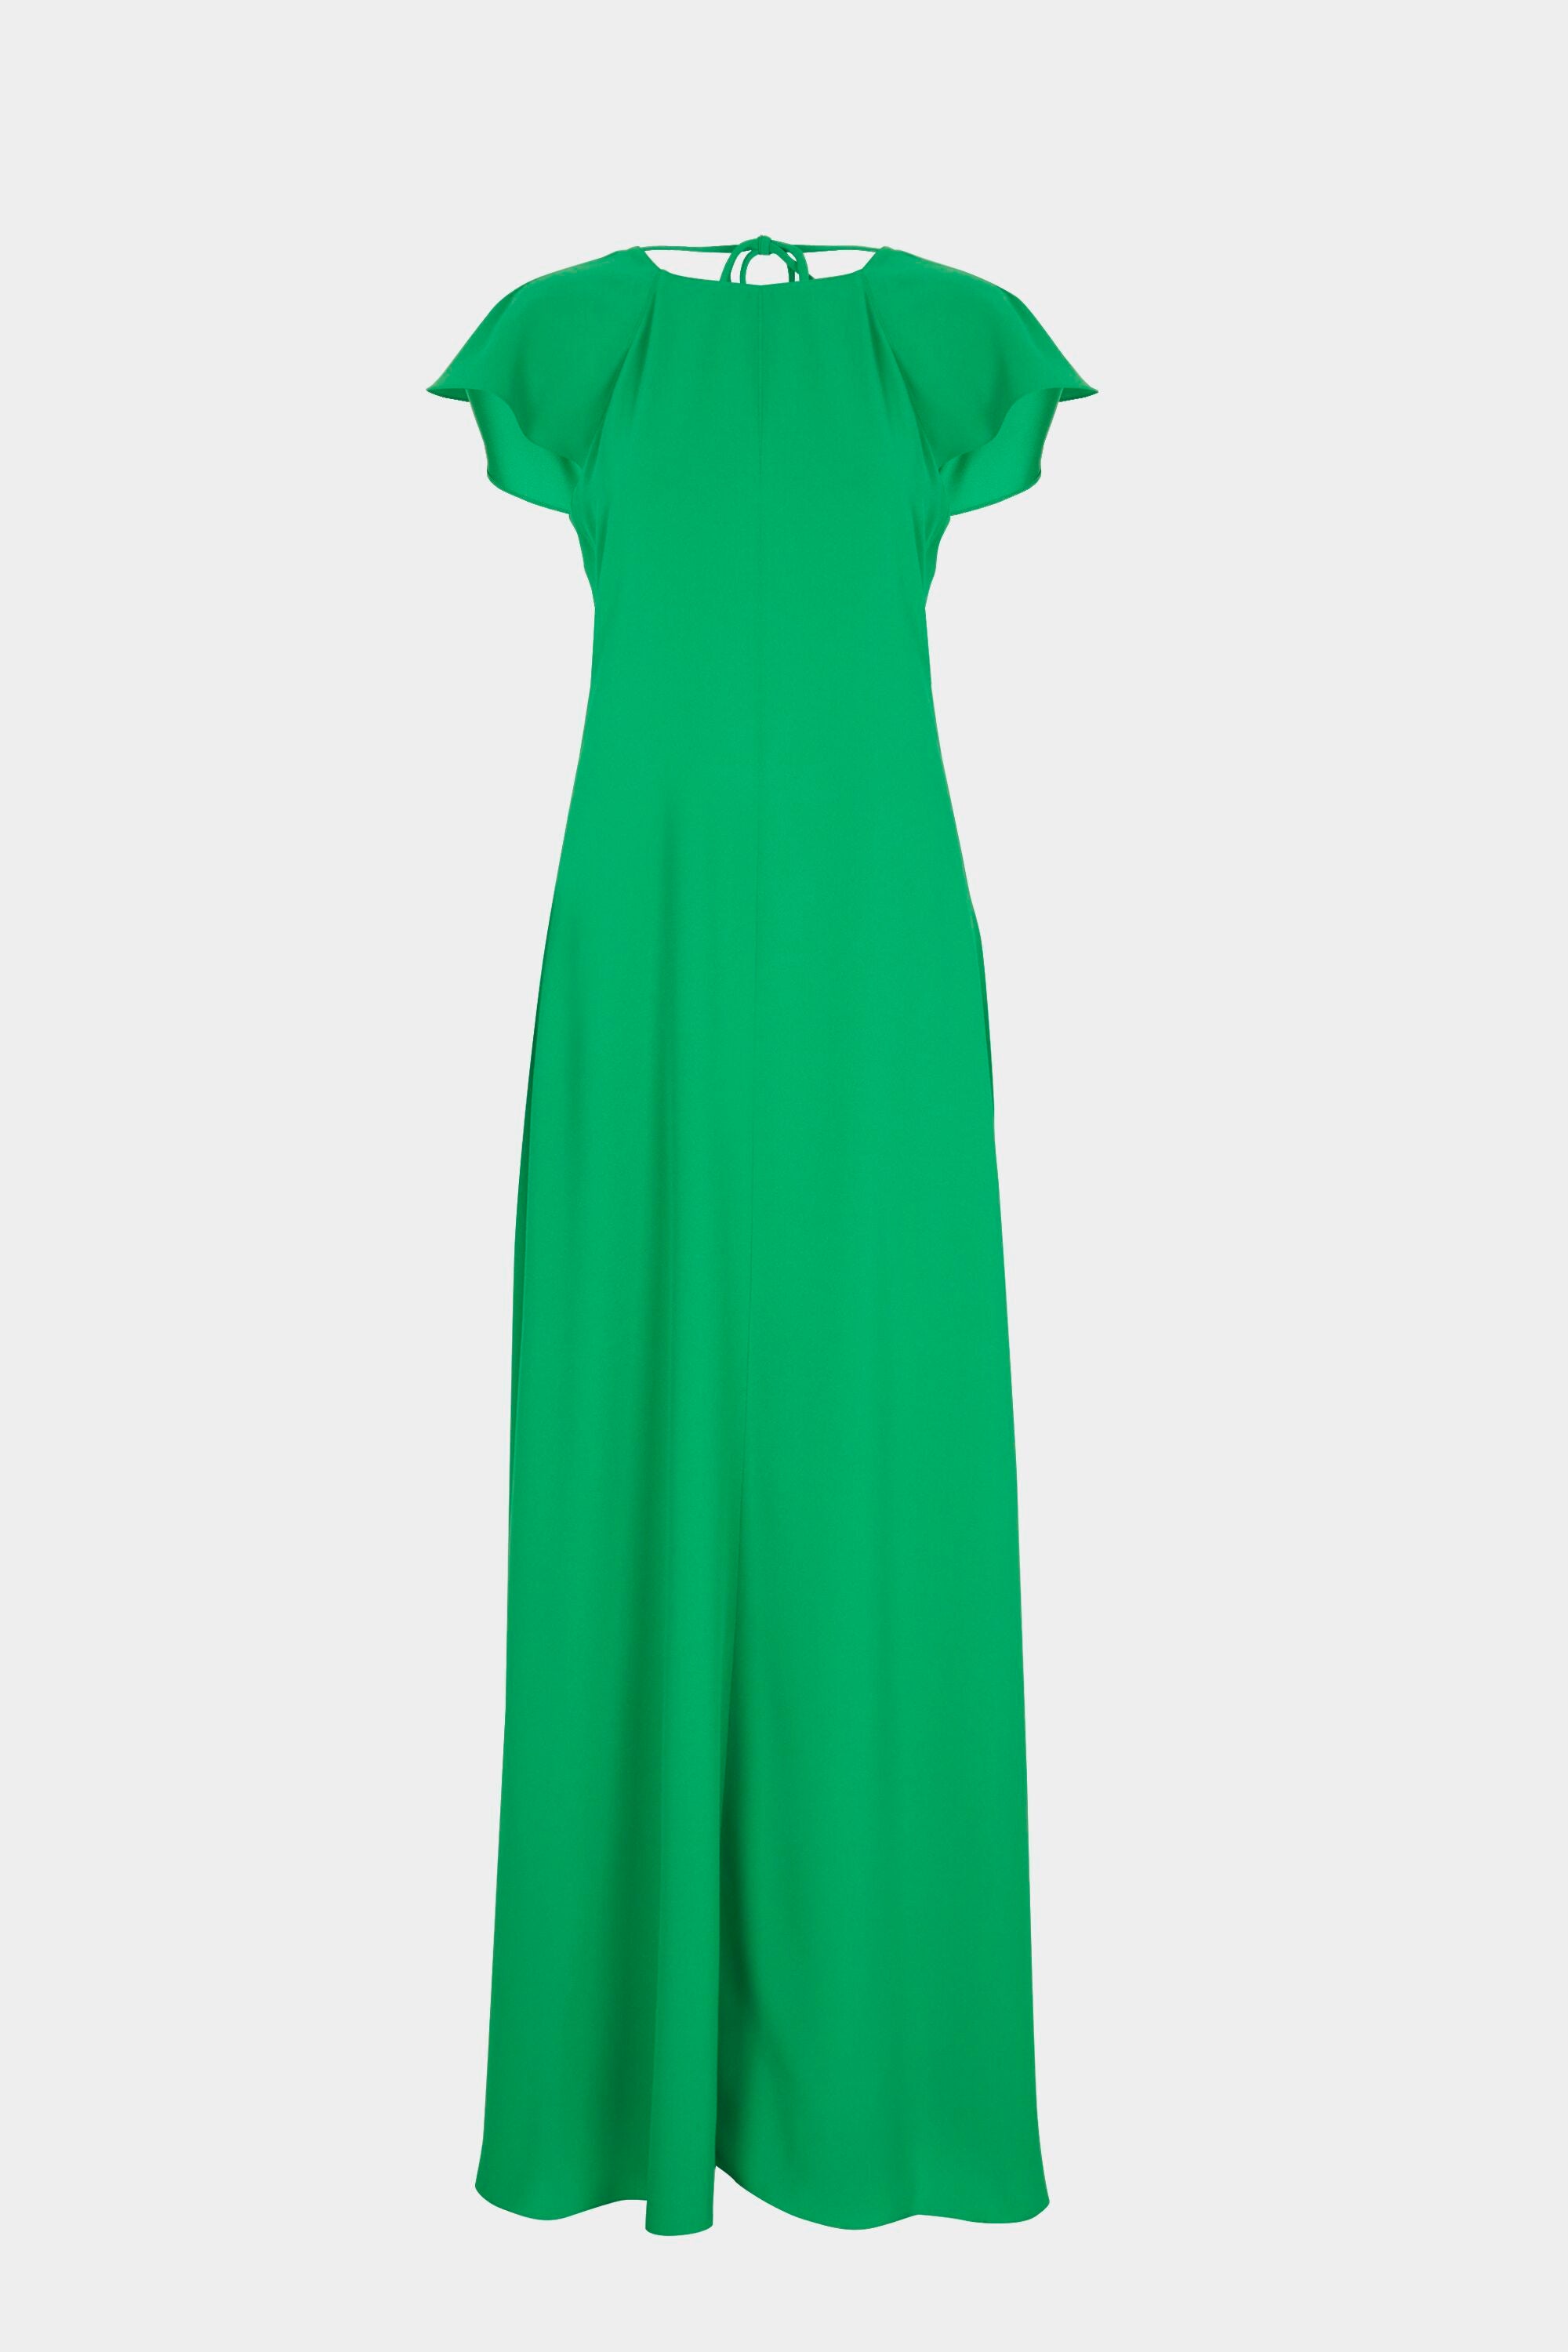 Buy Berrylush Maxi Dresses online - Women - 103 products | FASHIOLA.in